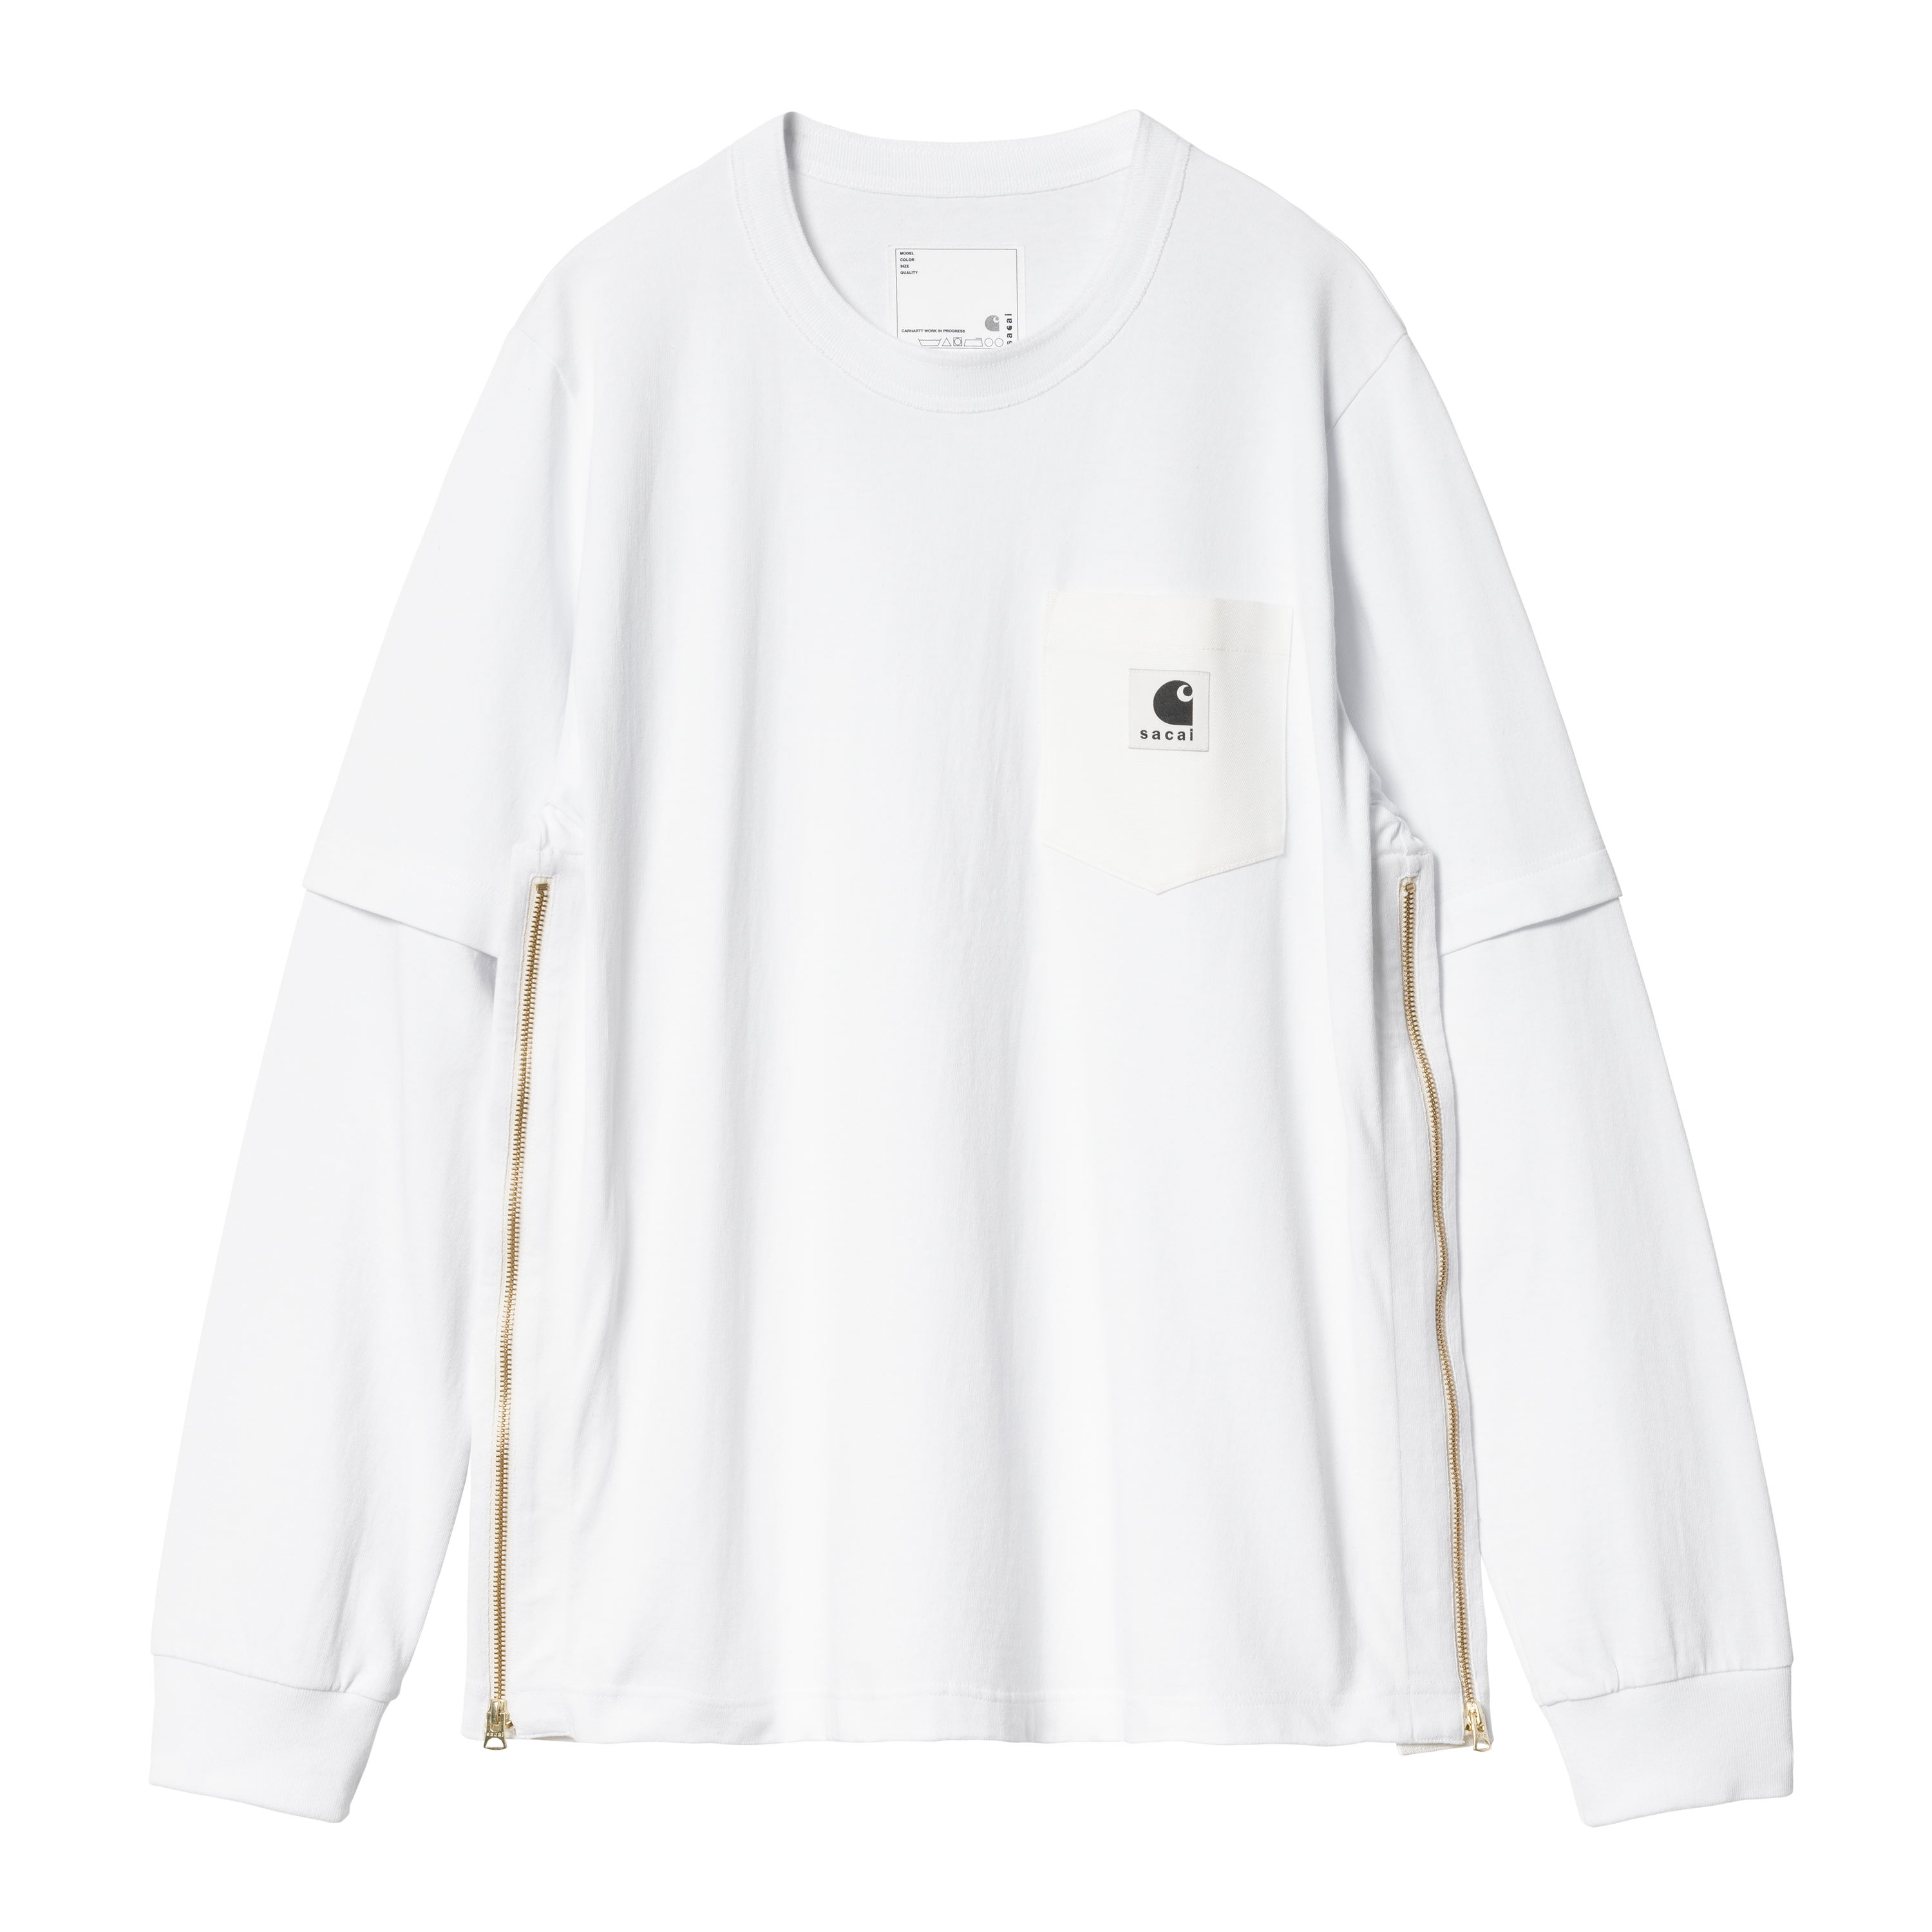 Carhartt WIP sacai x Carhartt WIP Long Sleeve T-Shirt in Bianco